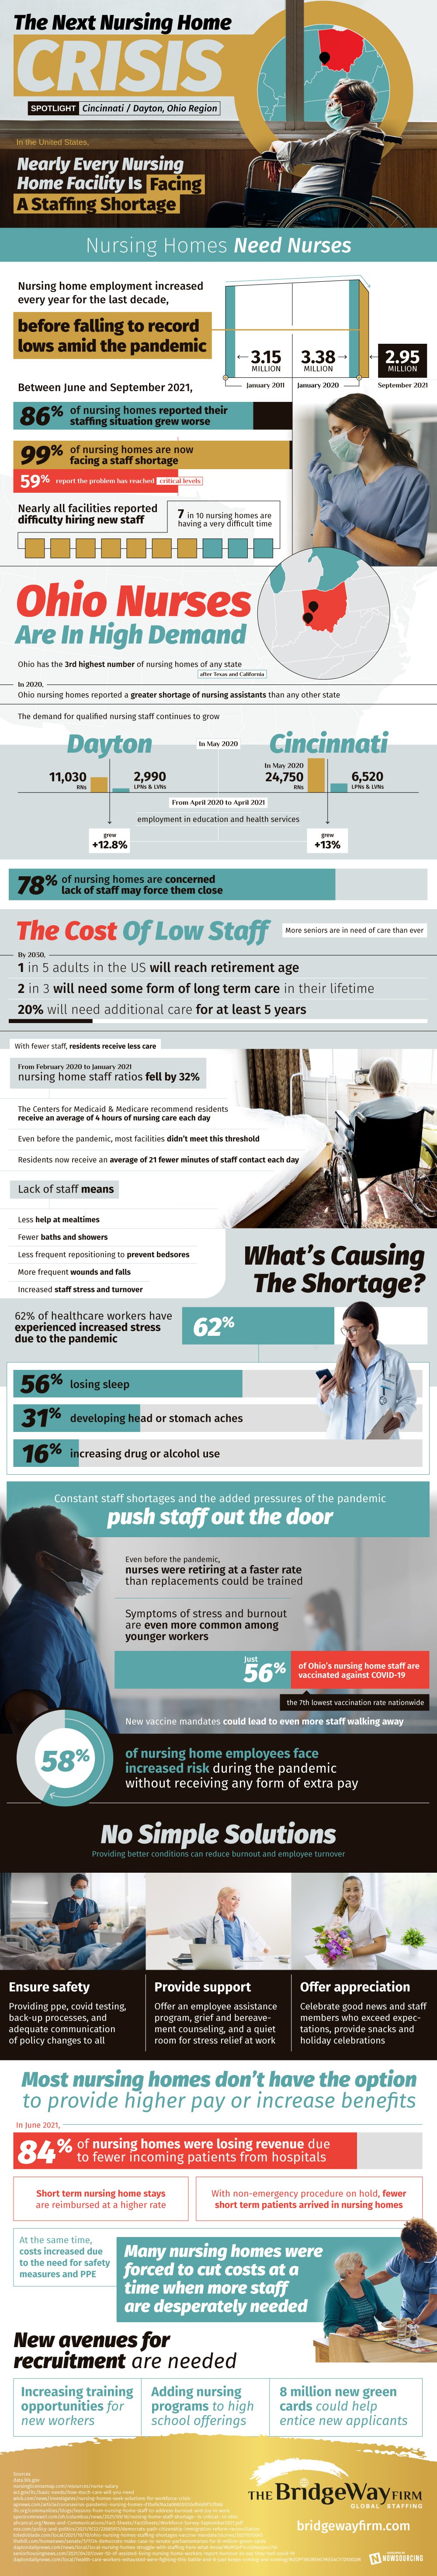 The Next Nursing Home Crisis - Infographic